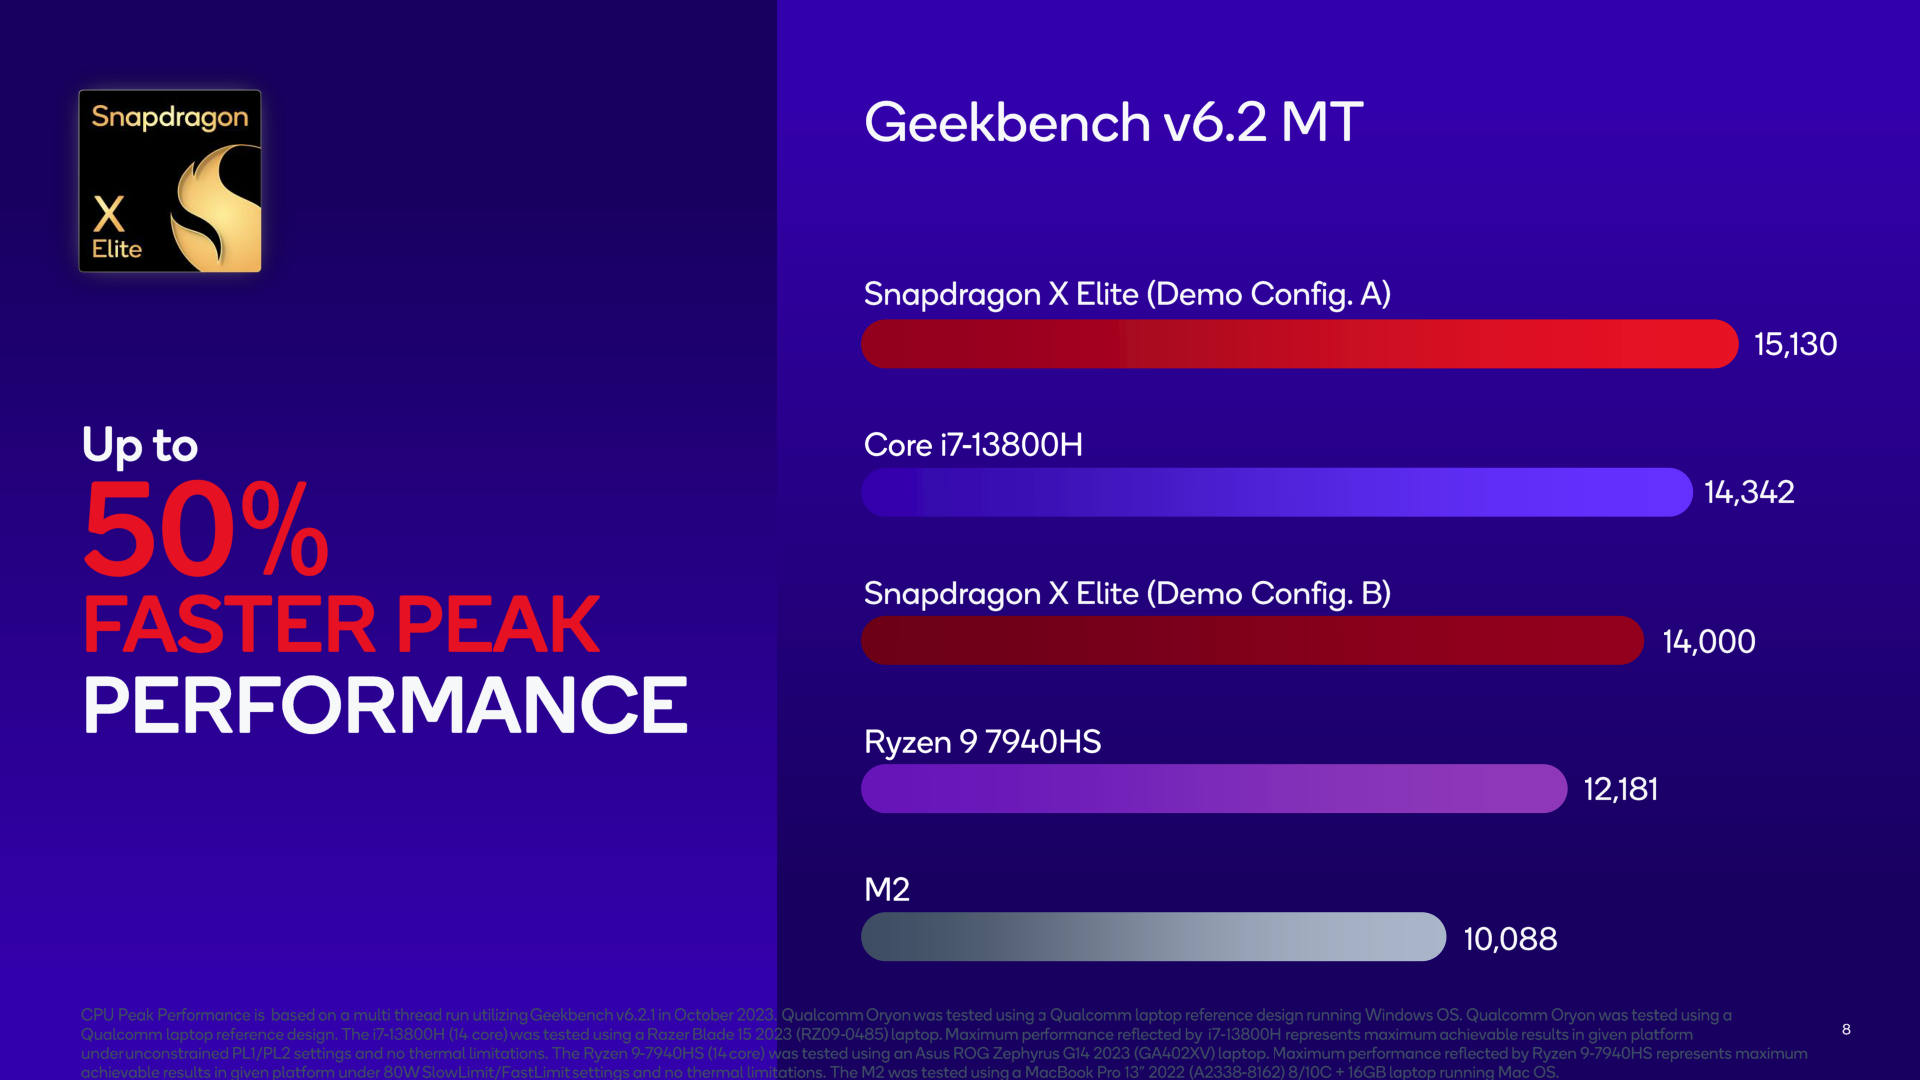 Qualcomm-Snapdragon-X-Elite-CPU-Benchmarks-_-Geekbench-6-MT.png